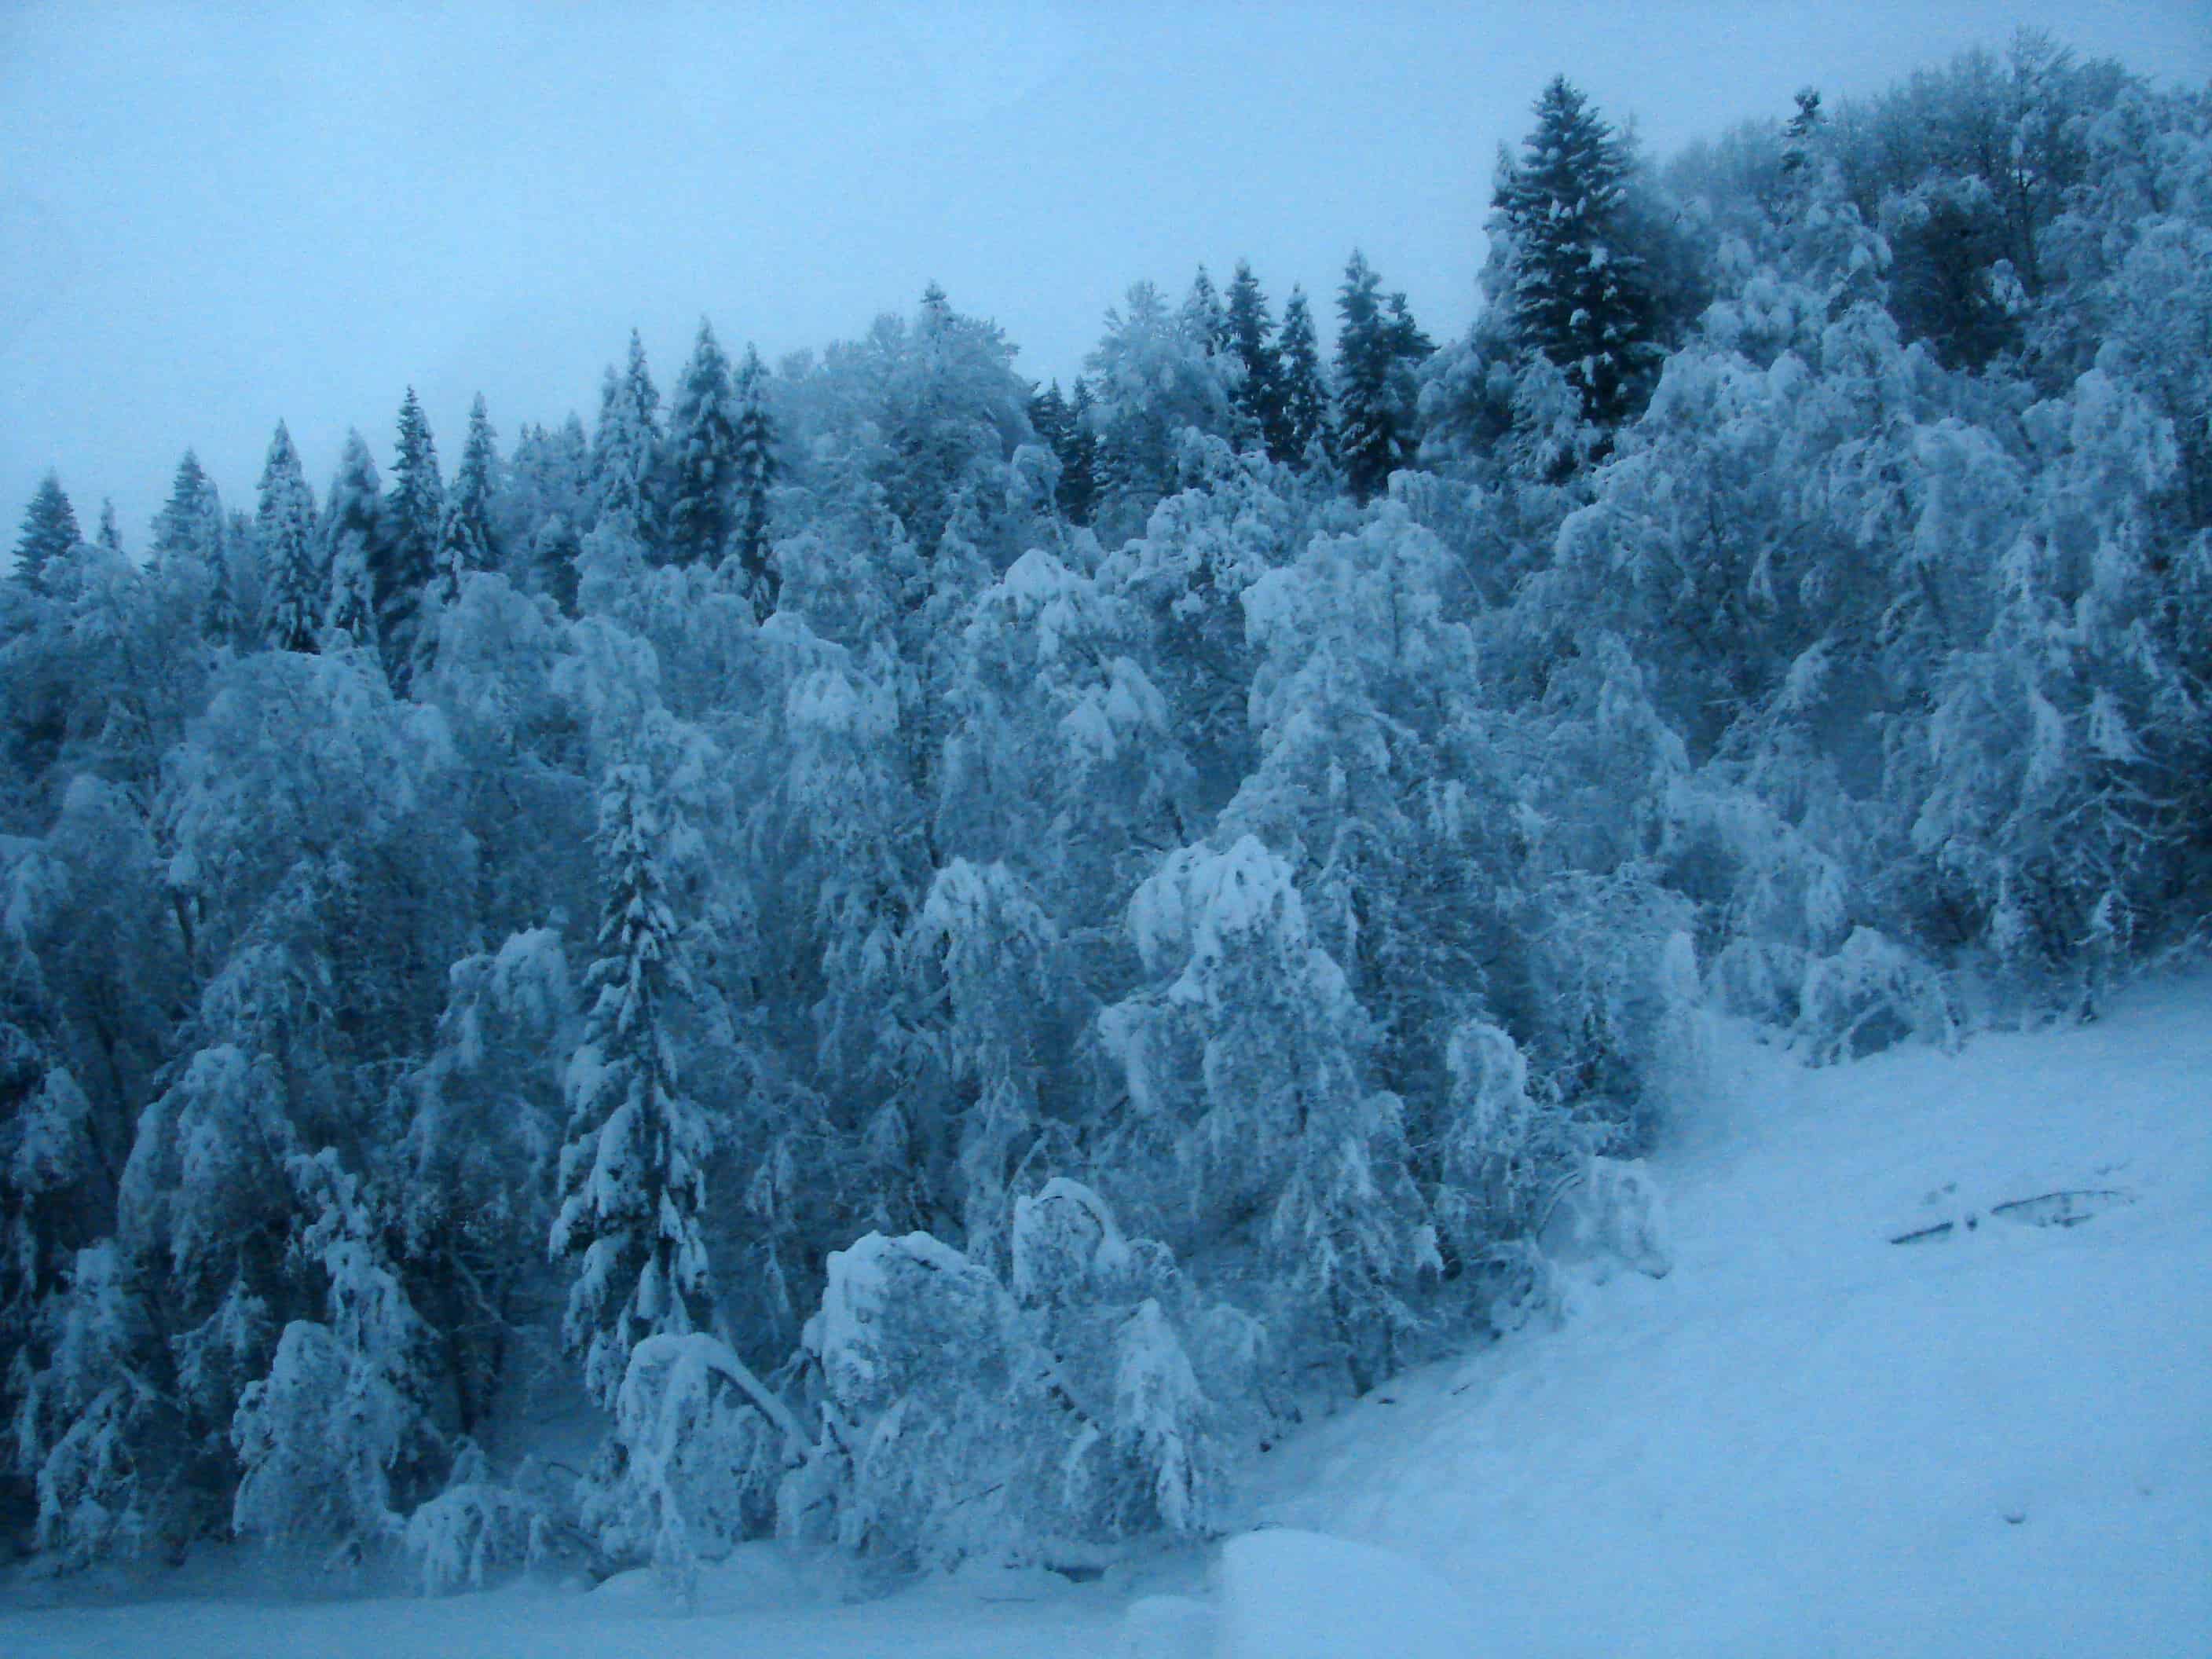 Trees heavy with snow